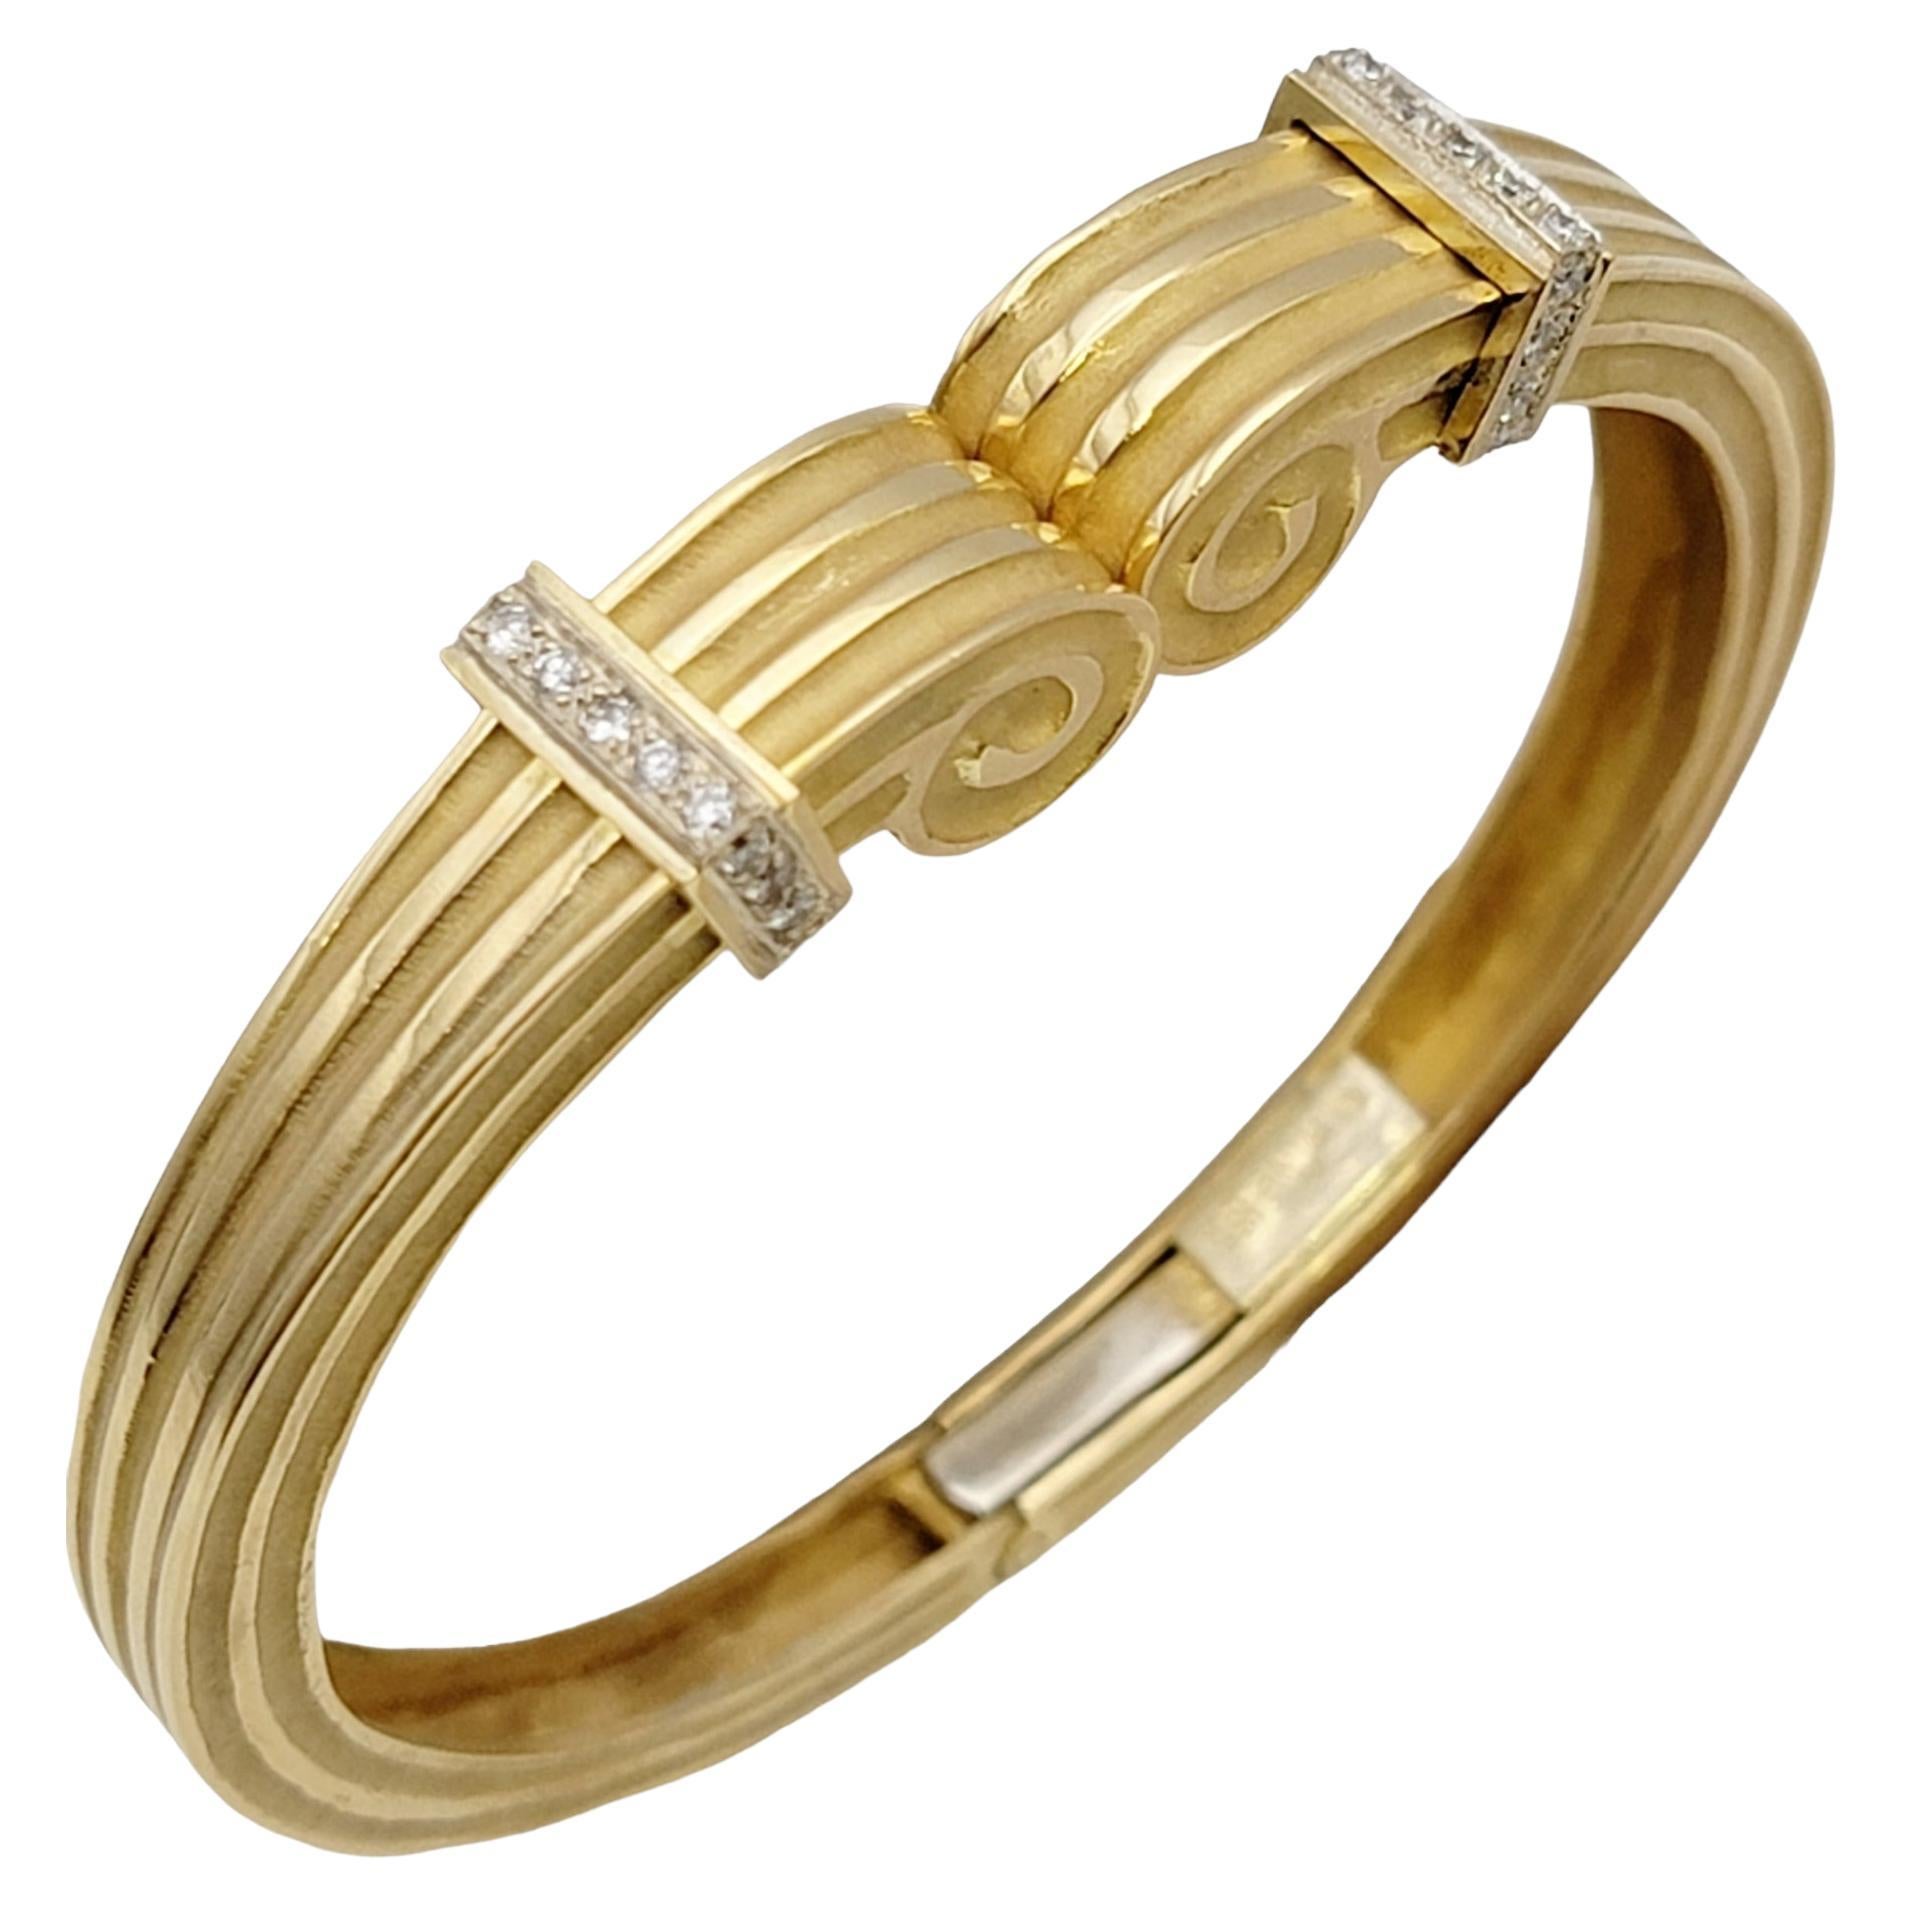 Robert Wander Vintage 18 Karat Yellow Gold Scroll Cuff Bracelet with Diamonds